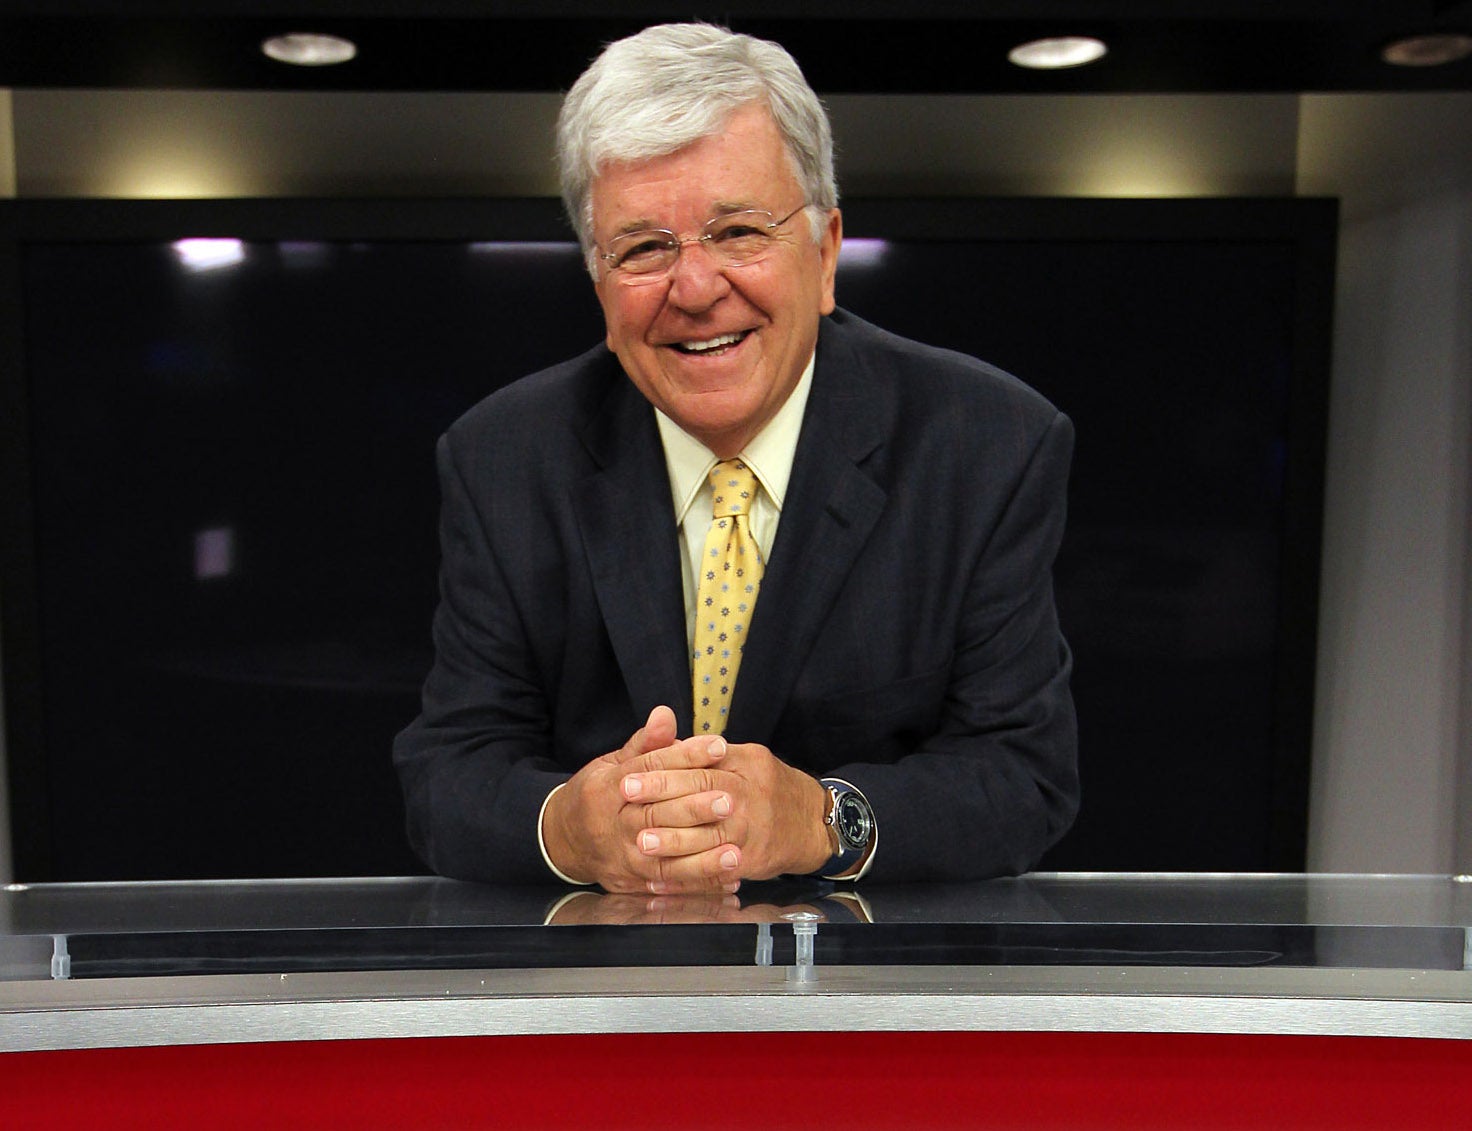 Chet Curtis, longtime Boston TV news anchor, has died